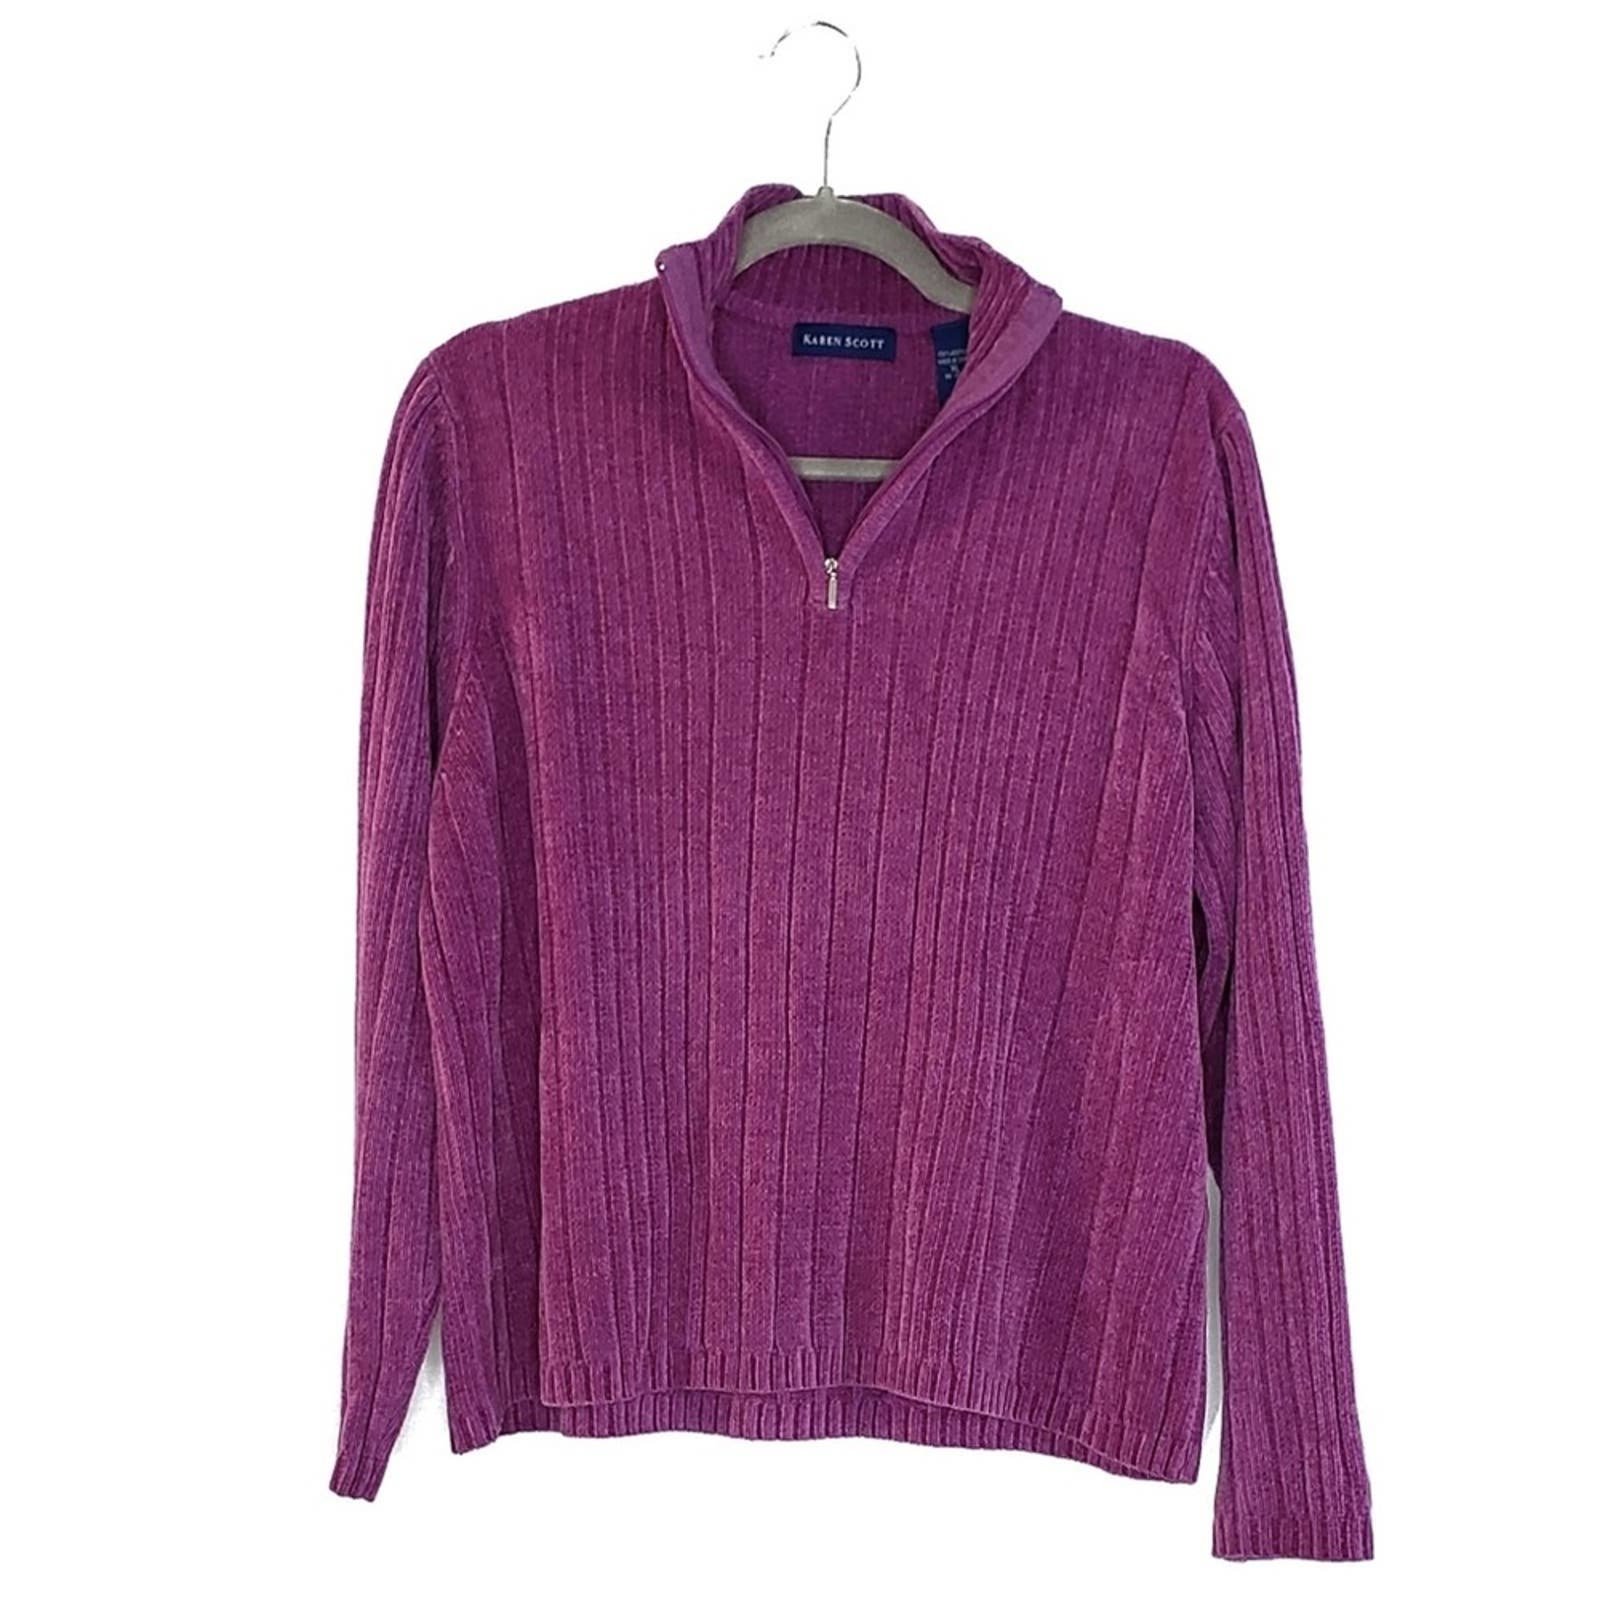 Karen Scott Purple Half Zip Pullover Sweater L 7K95F3Cq